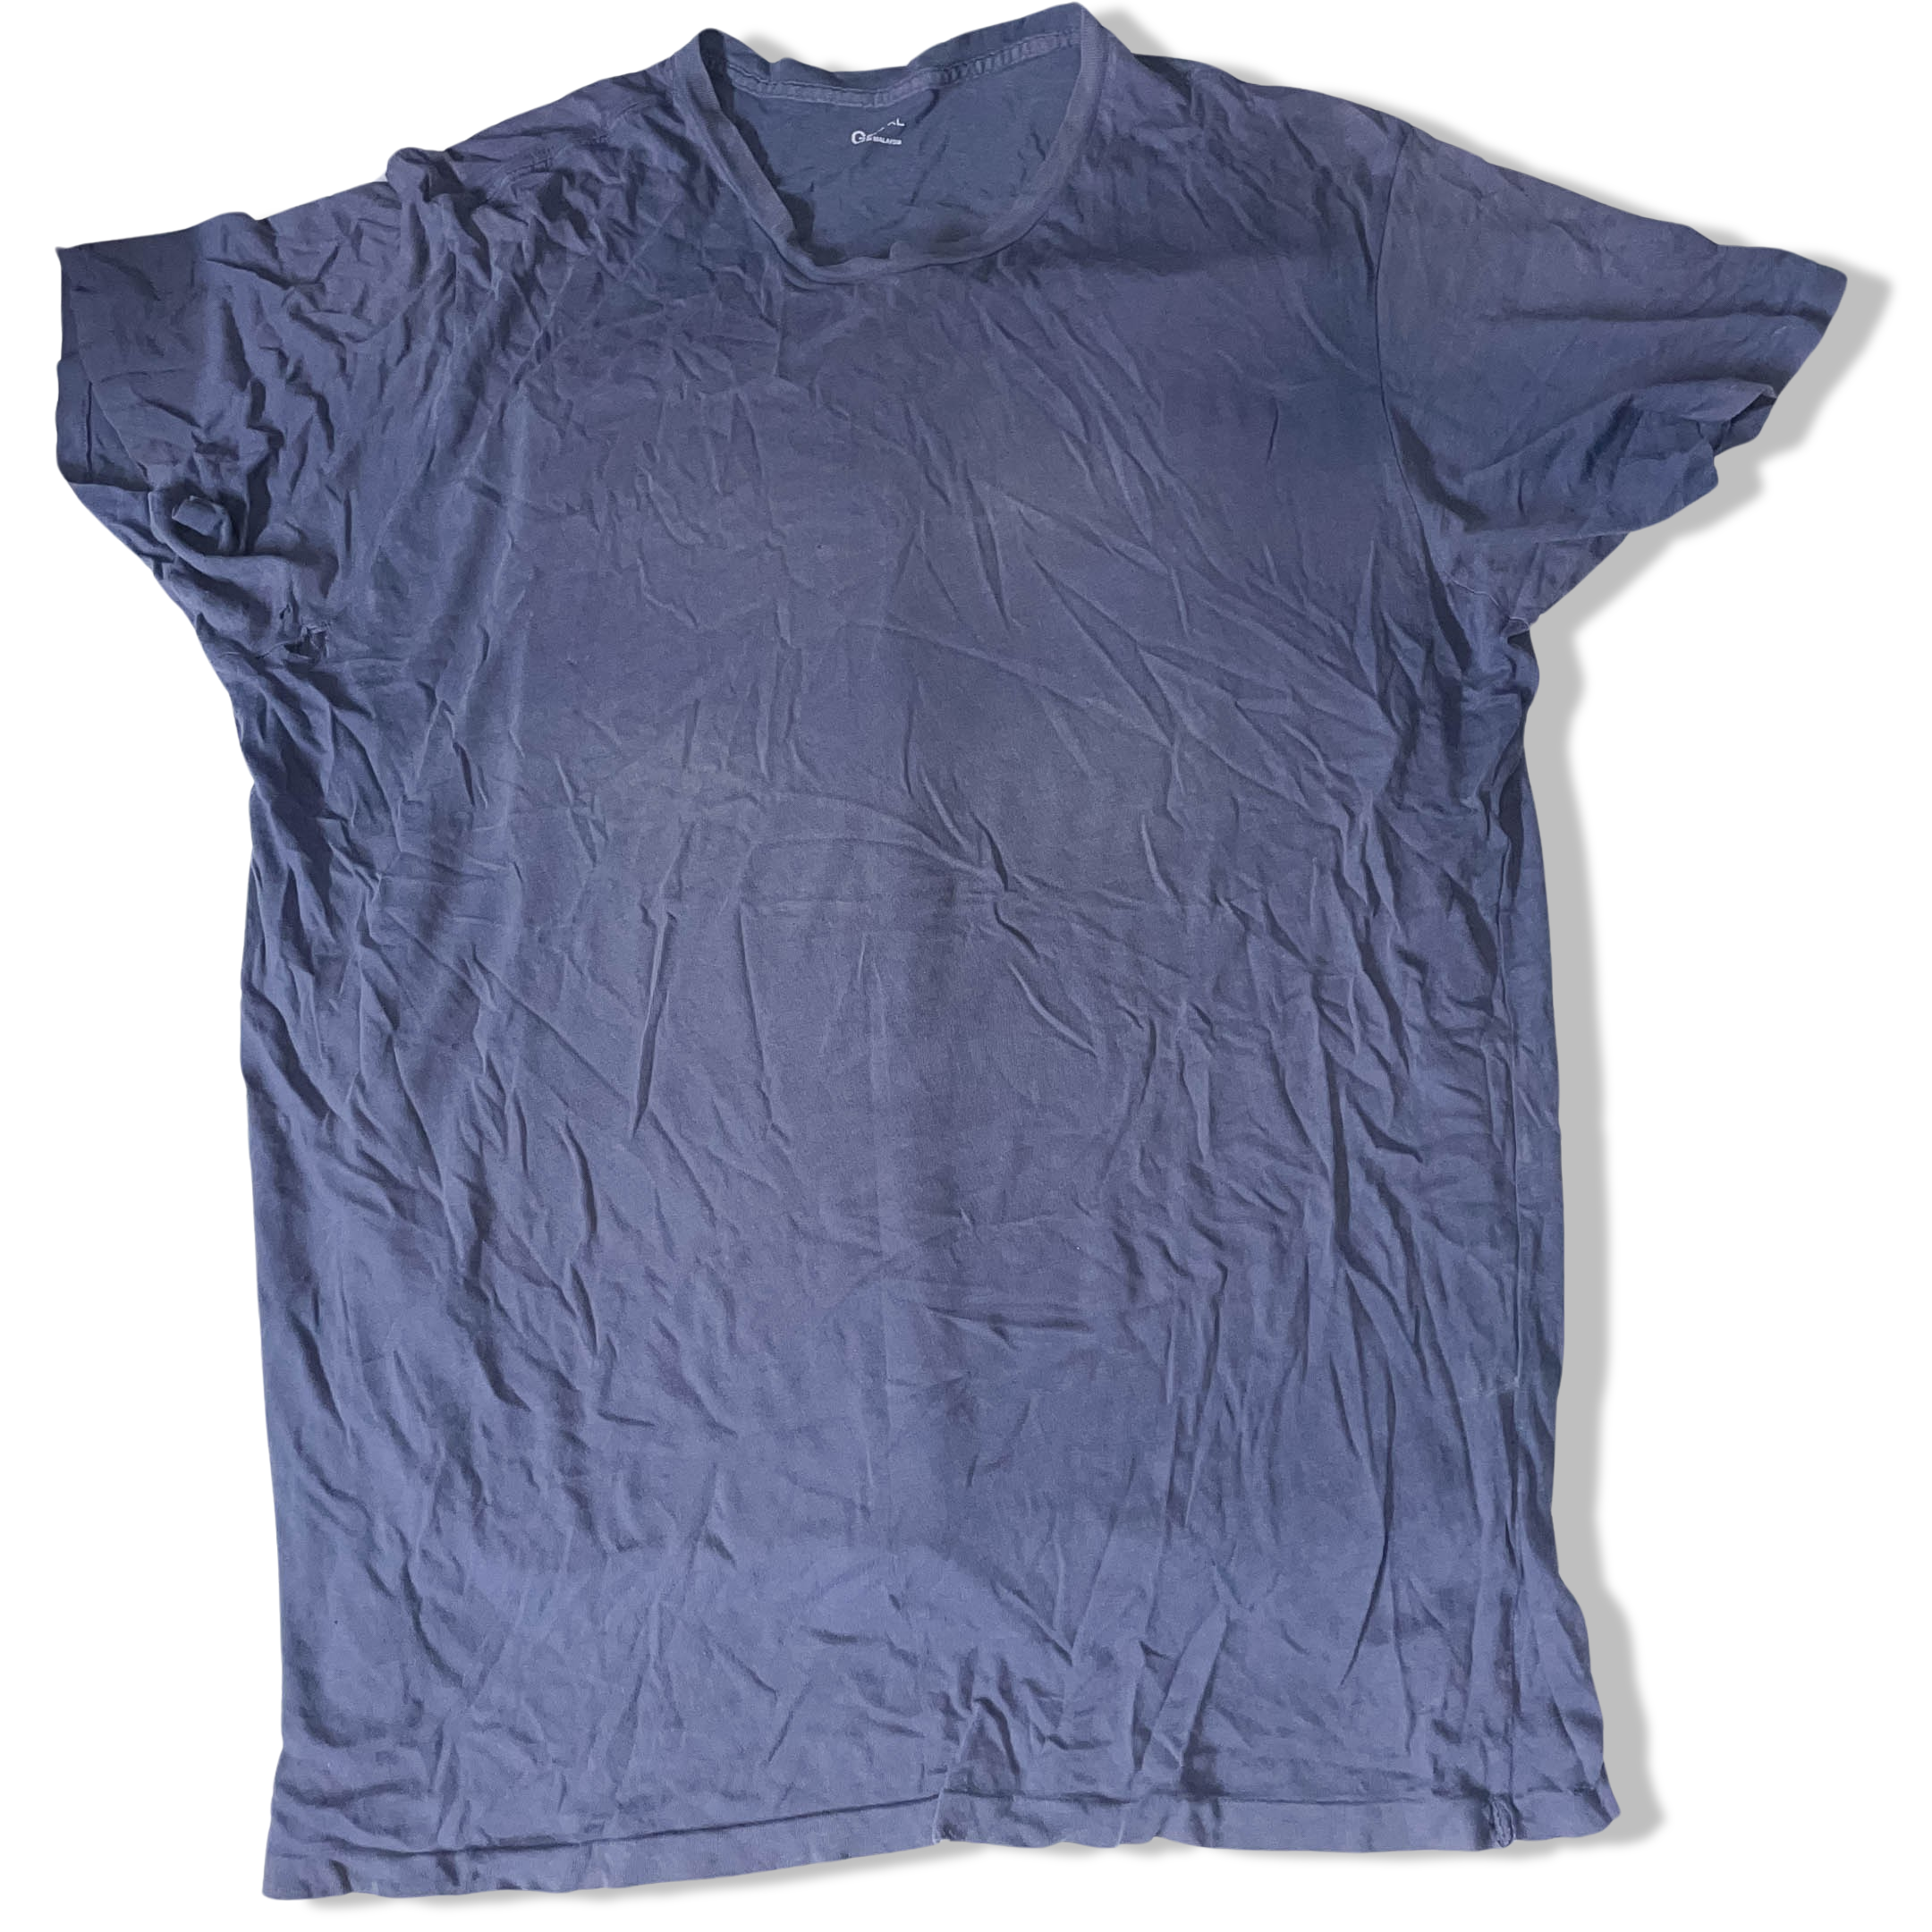 Vintage Grey Gildan Carling print mens XL short sleeve tees